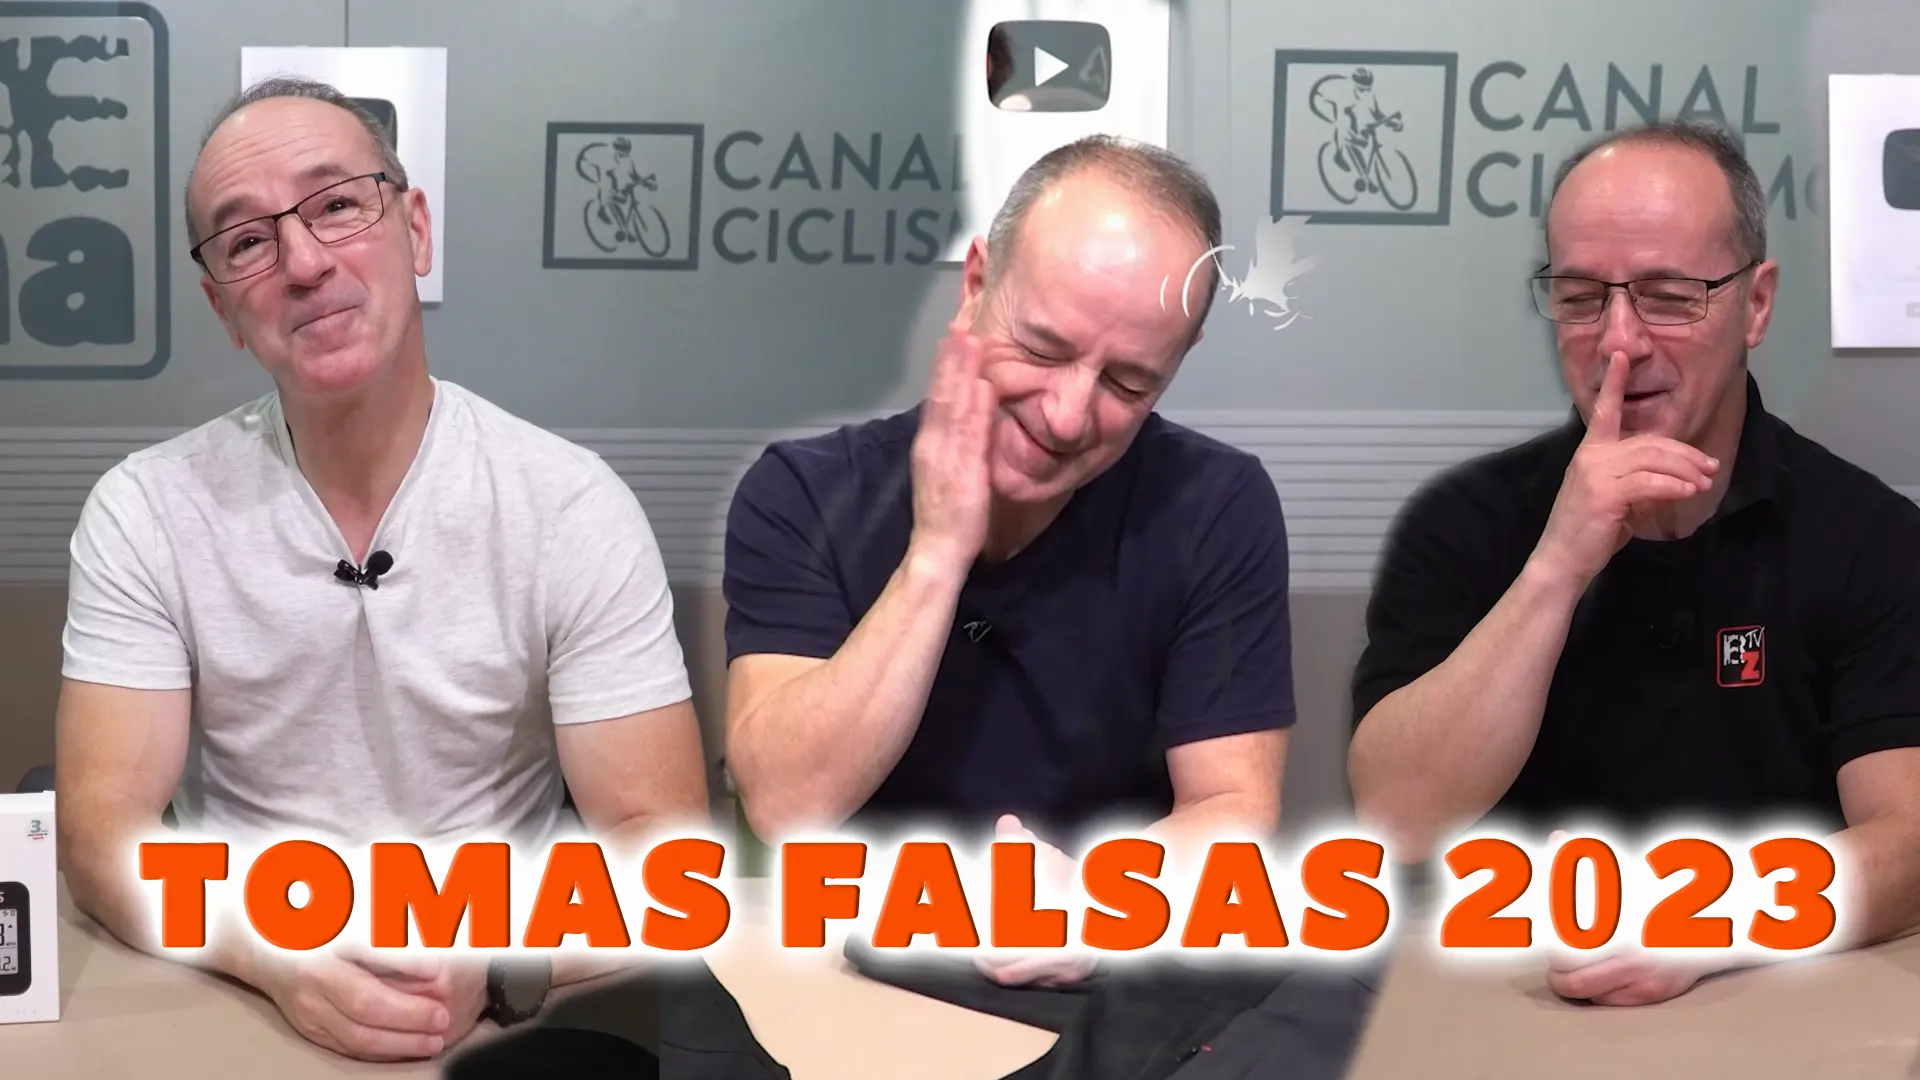 Tomas FALSAS Bikezona TV 2023